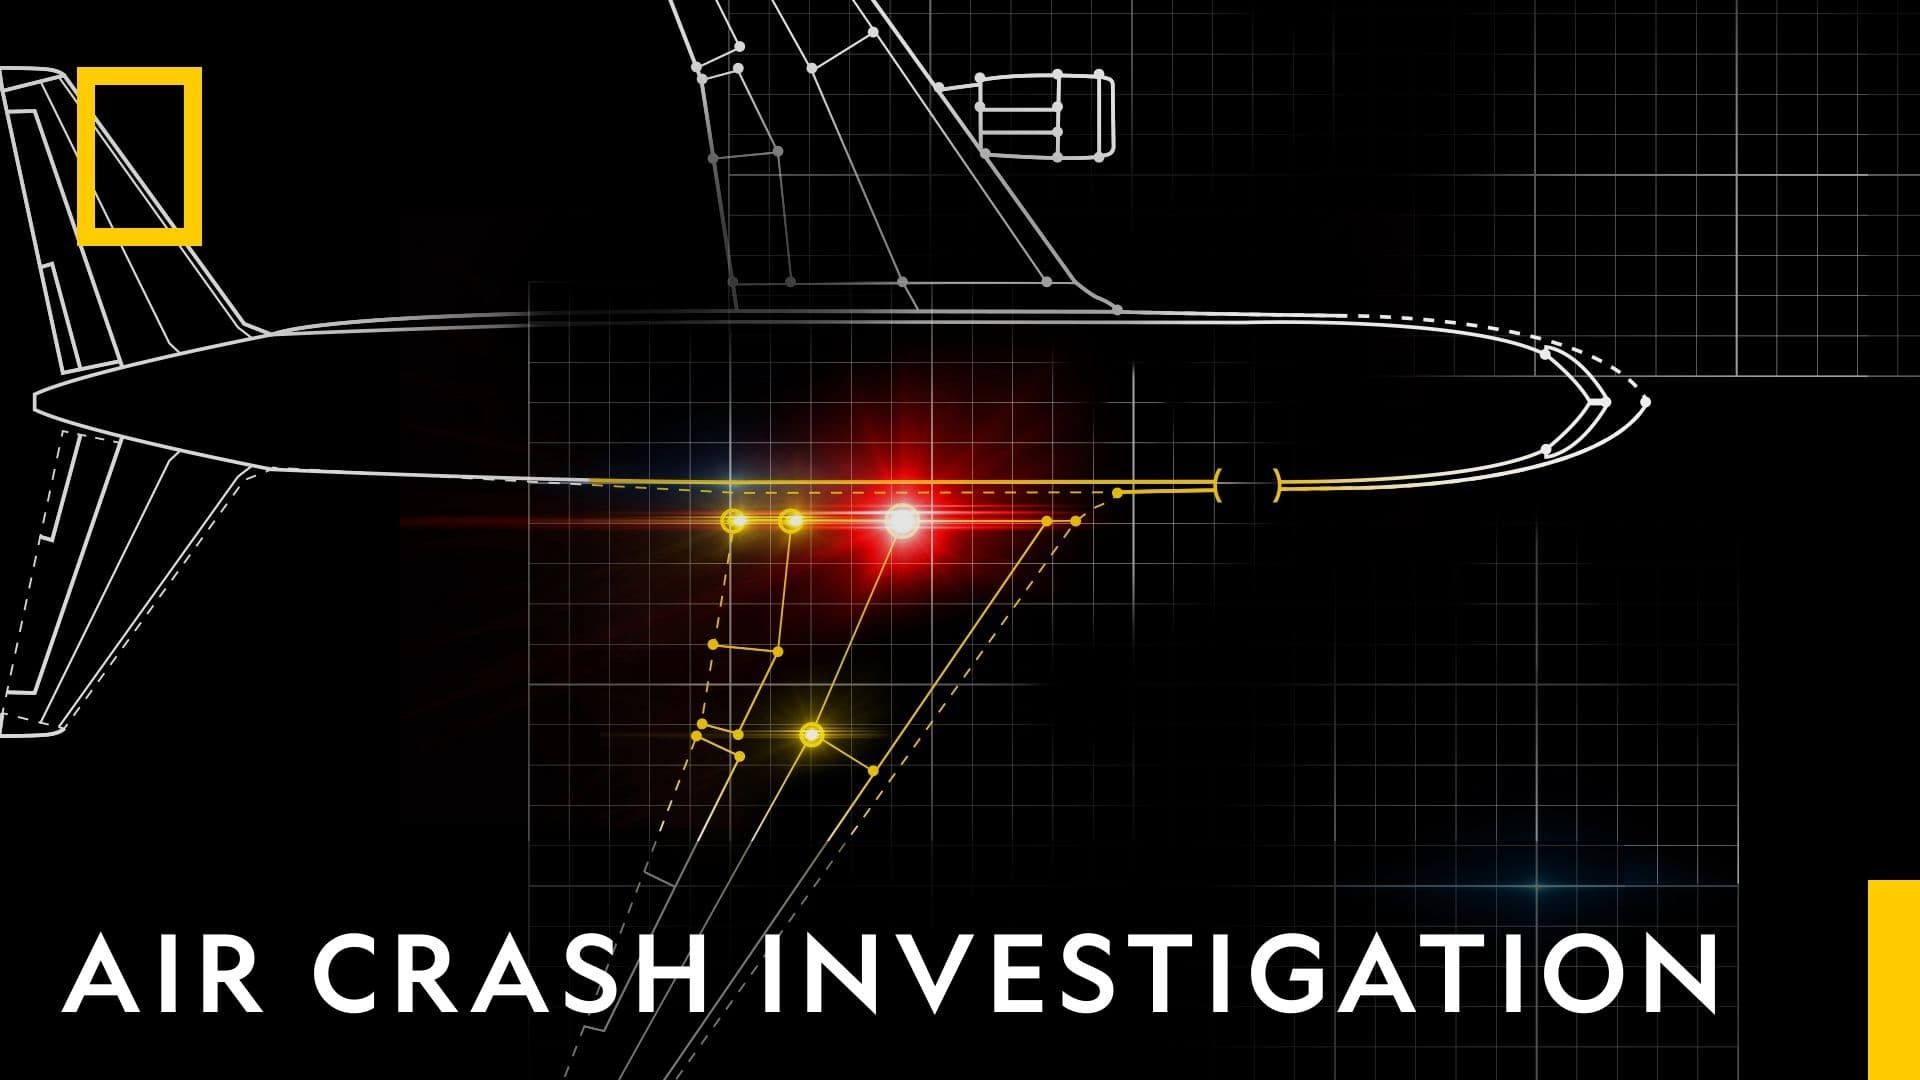 Air Crash Investigation Special Report background